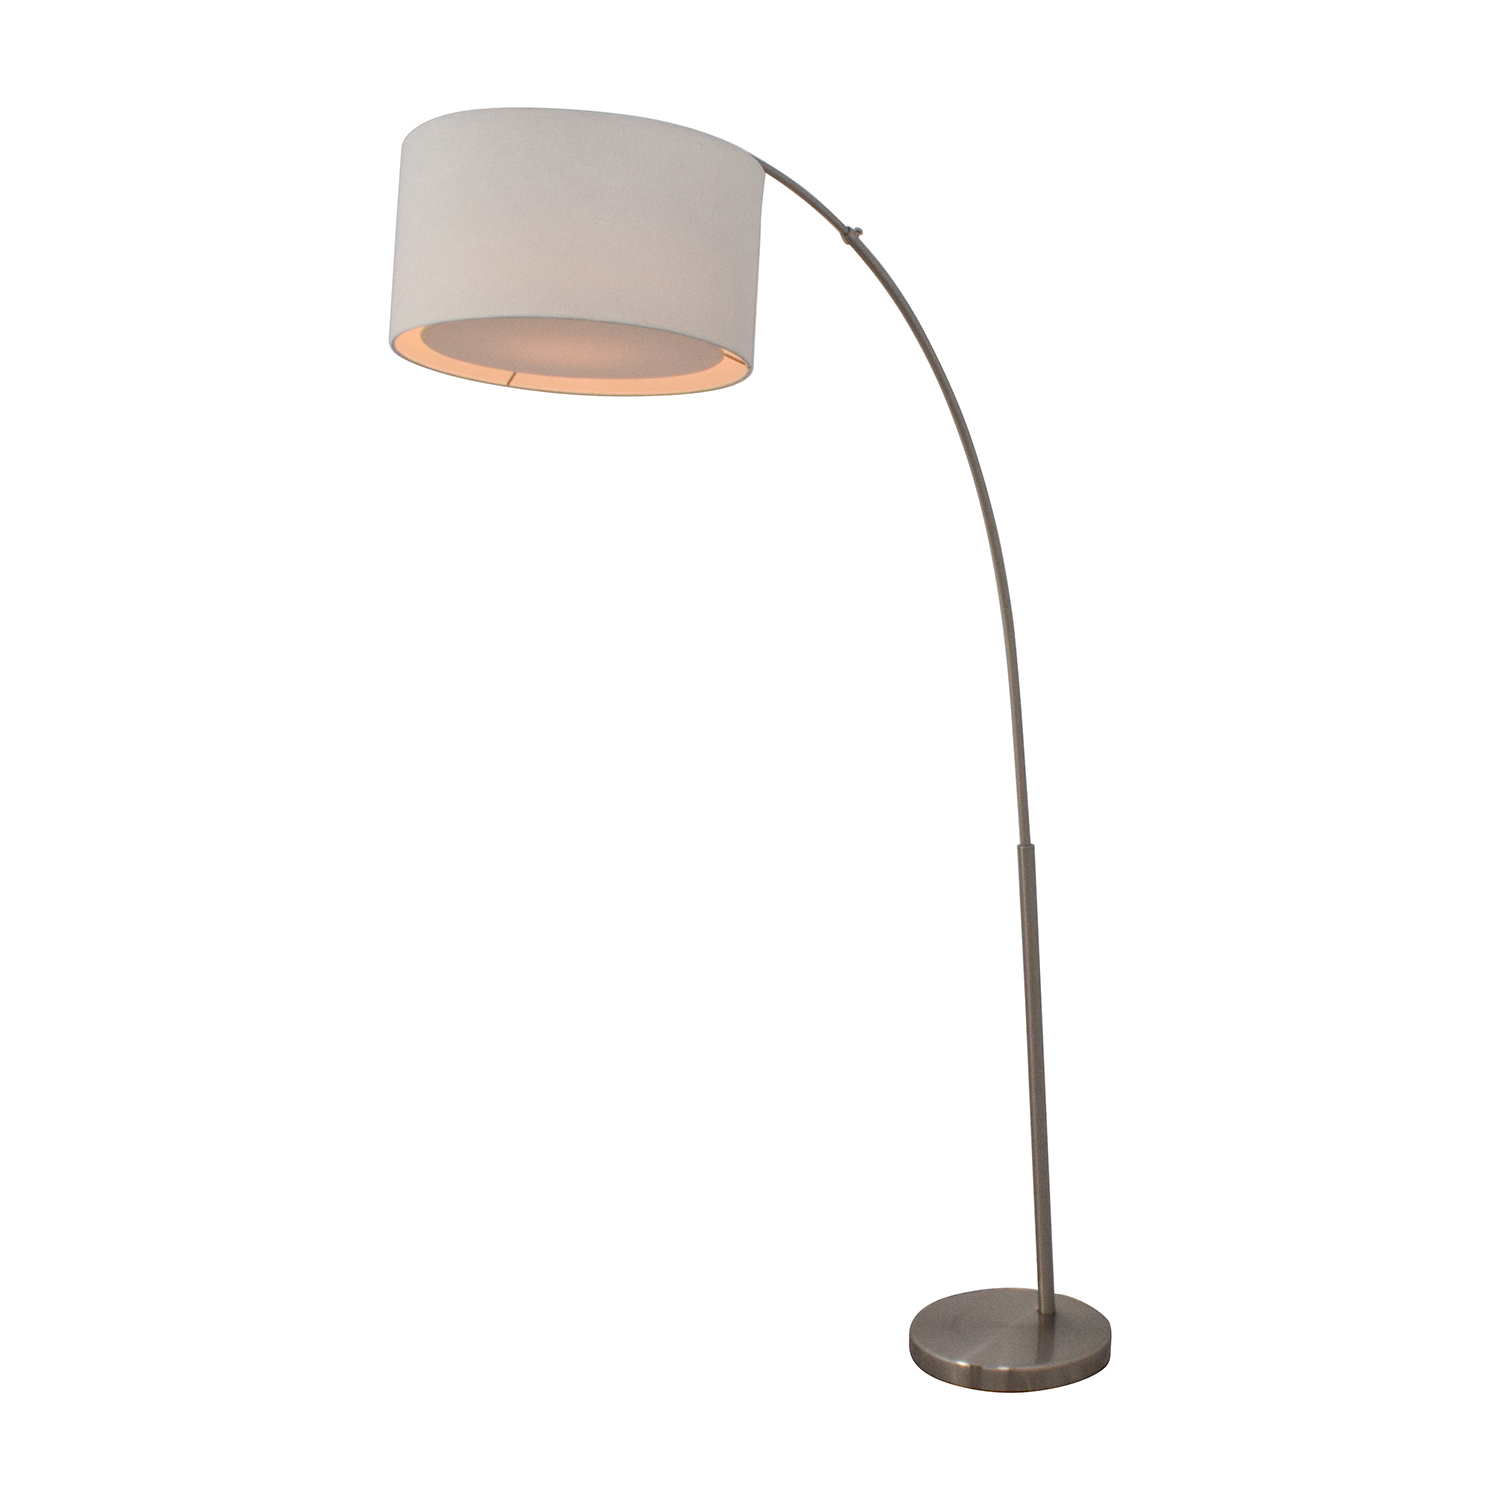 54 Off Cb2 Cb2 Grove Floor Lamp Decor for size 1500 X 1500